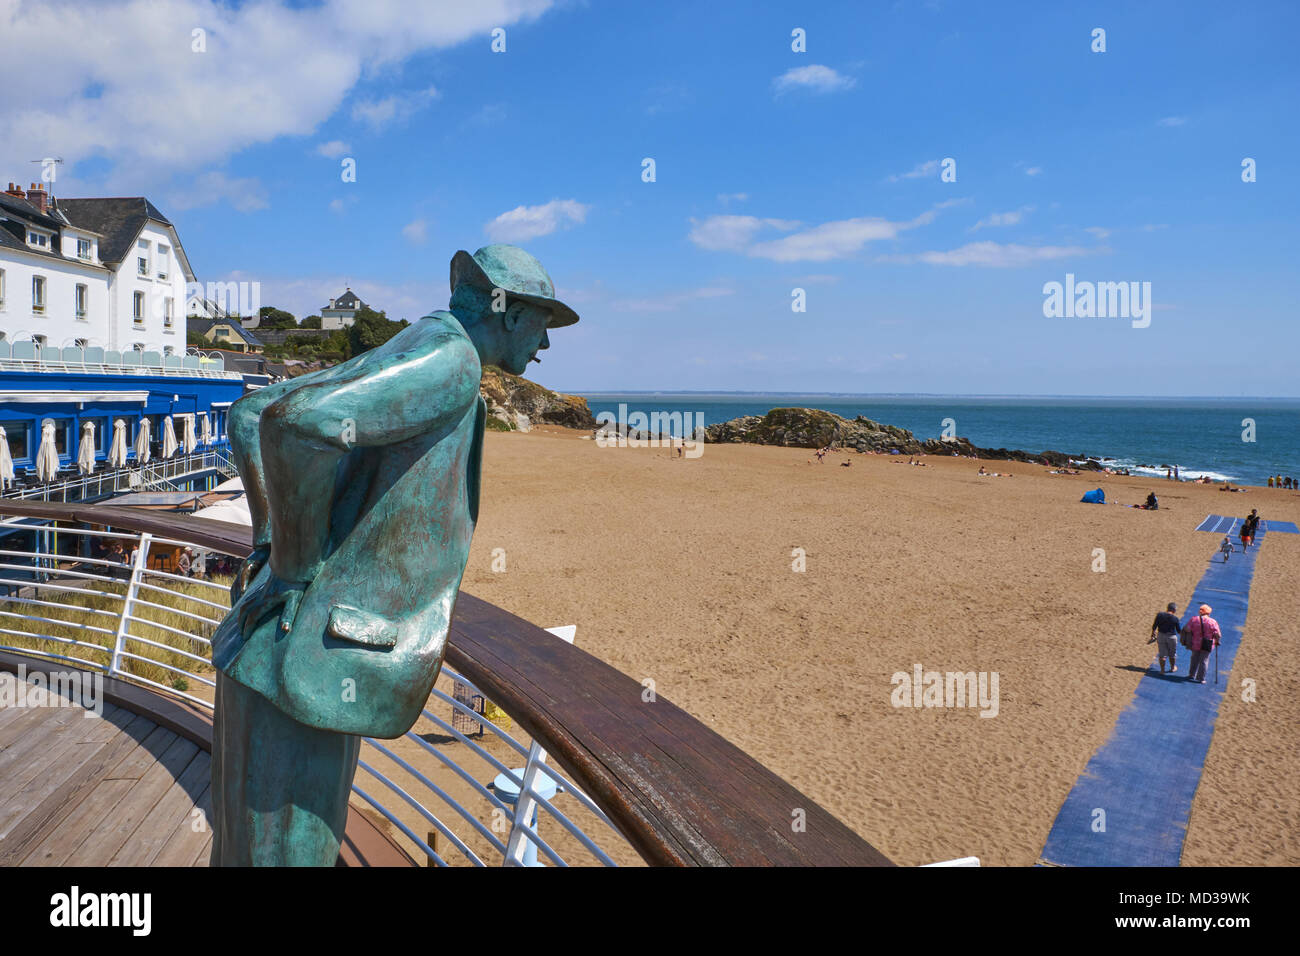 France, Loire-Atlantique, Saint-Nazaire, Saint-Marc beach where the moovie Monsieur Hulot's Holiday from Jacques Tati was shoot Stock Photo